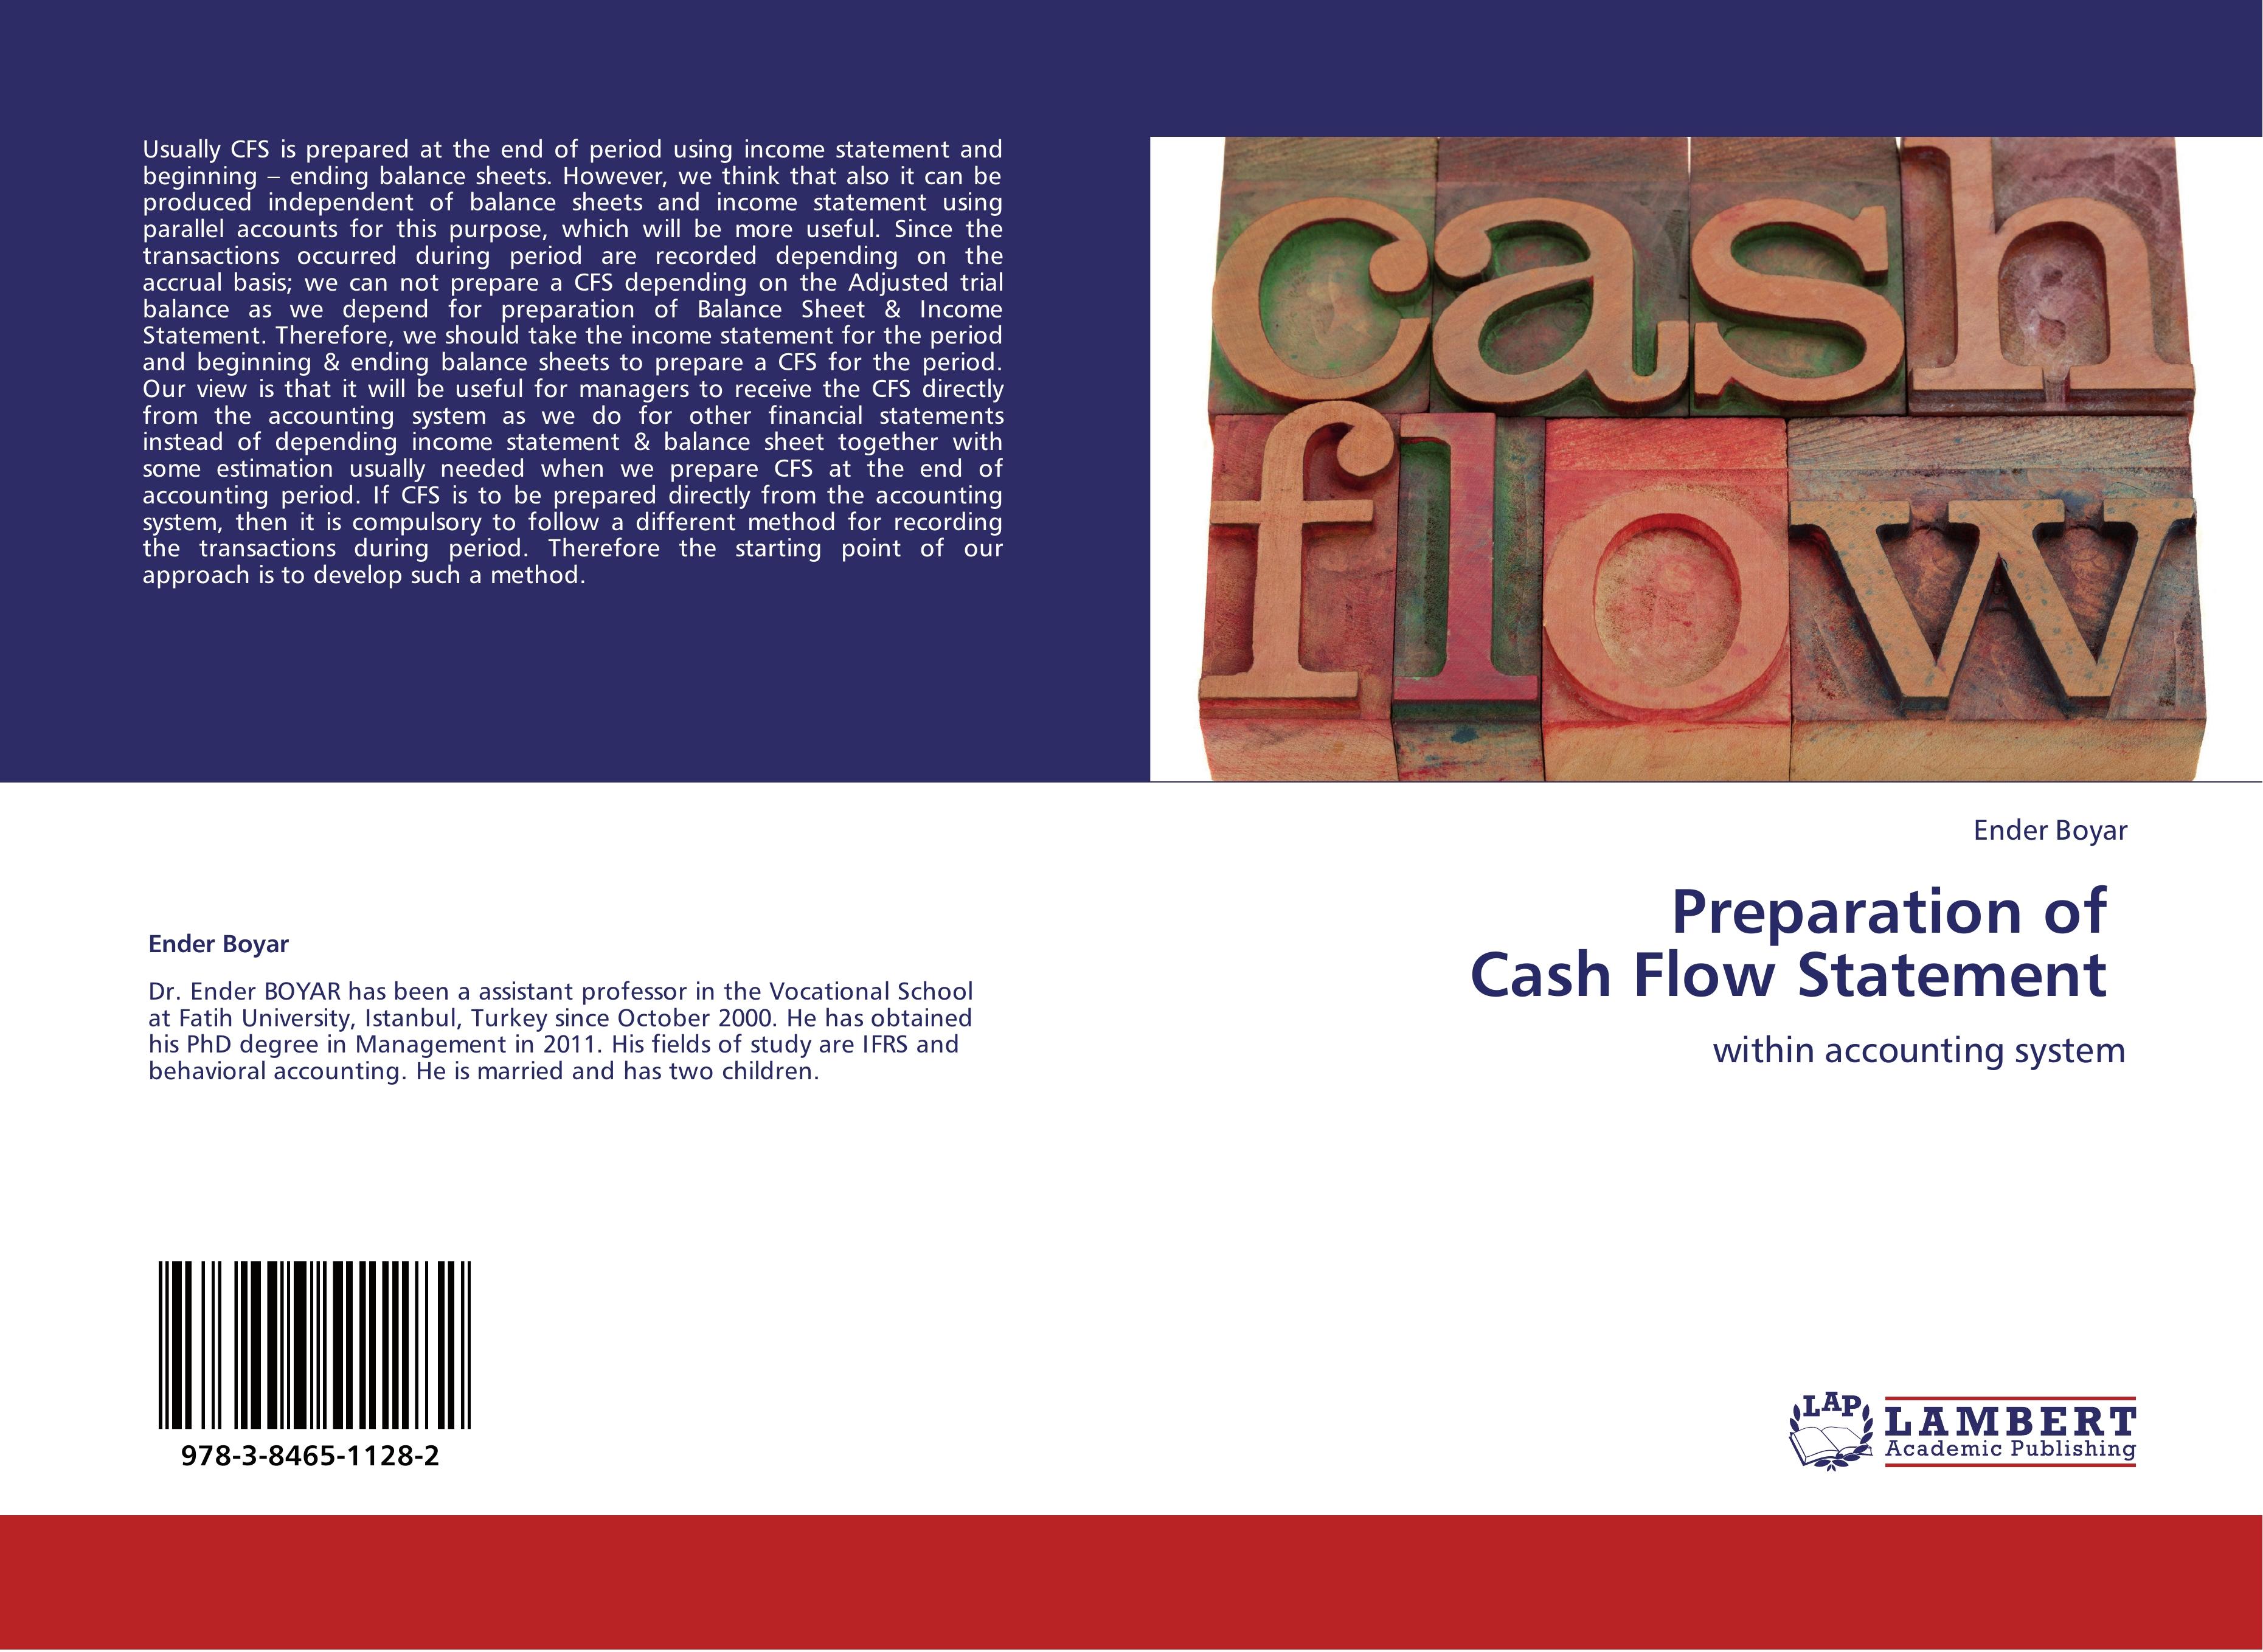 Preparation of Cash Flow Statement - Ender Boyar